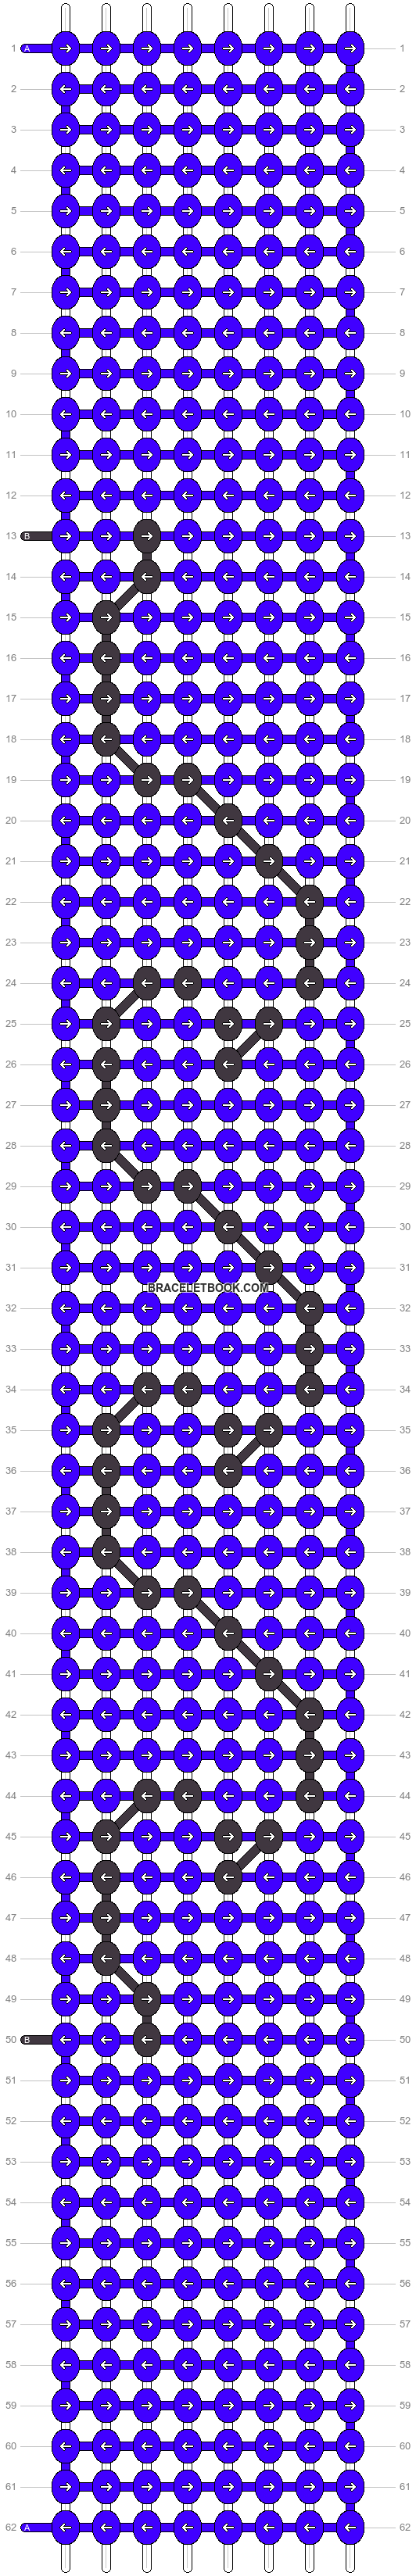 Alpha pattern #63257 variation #150057 pattern